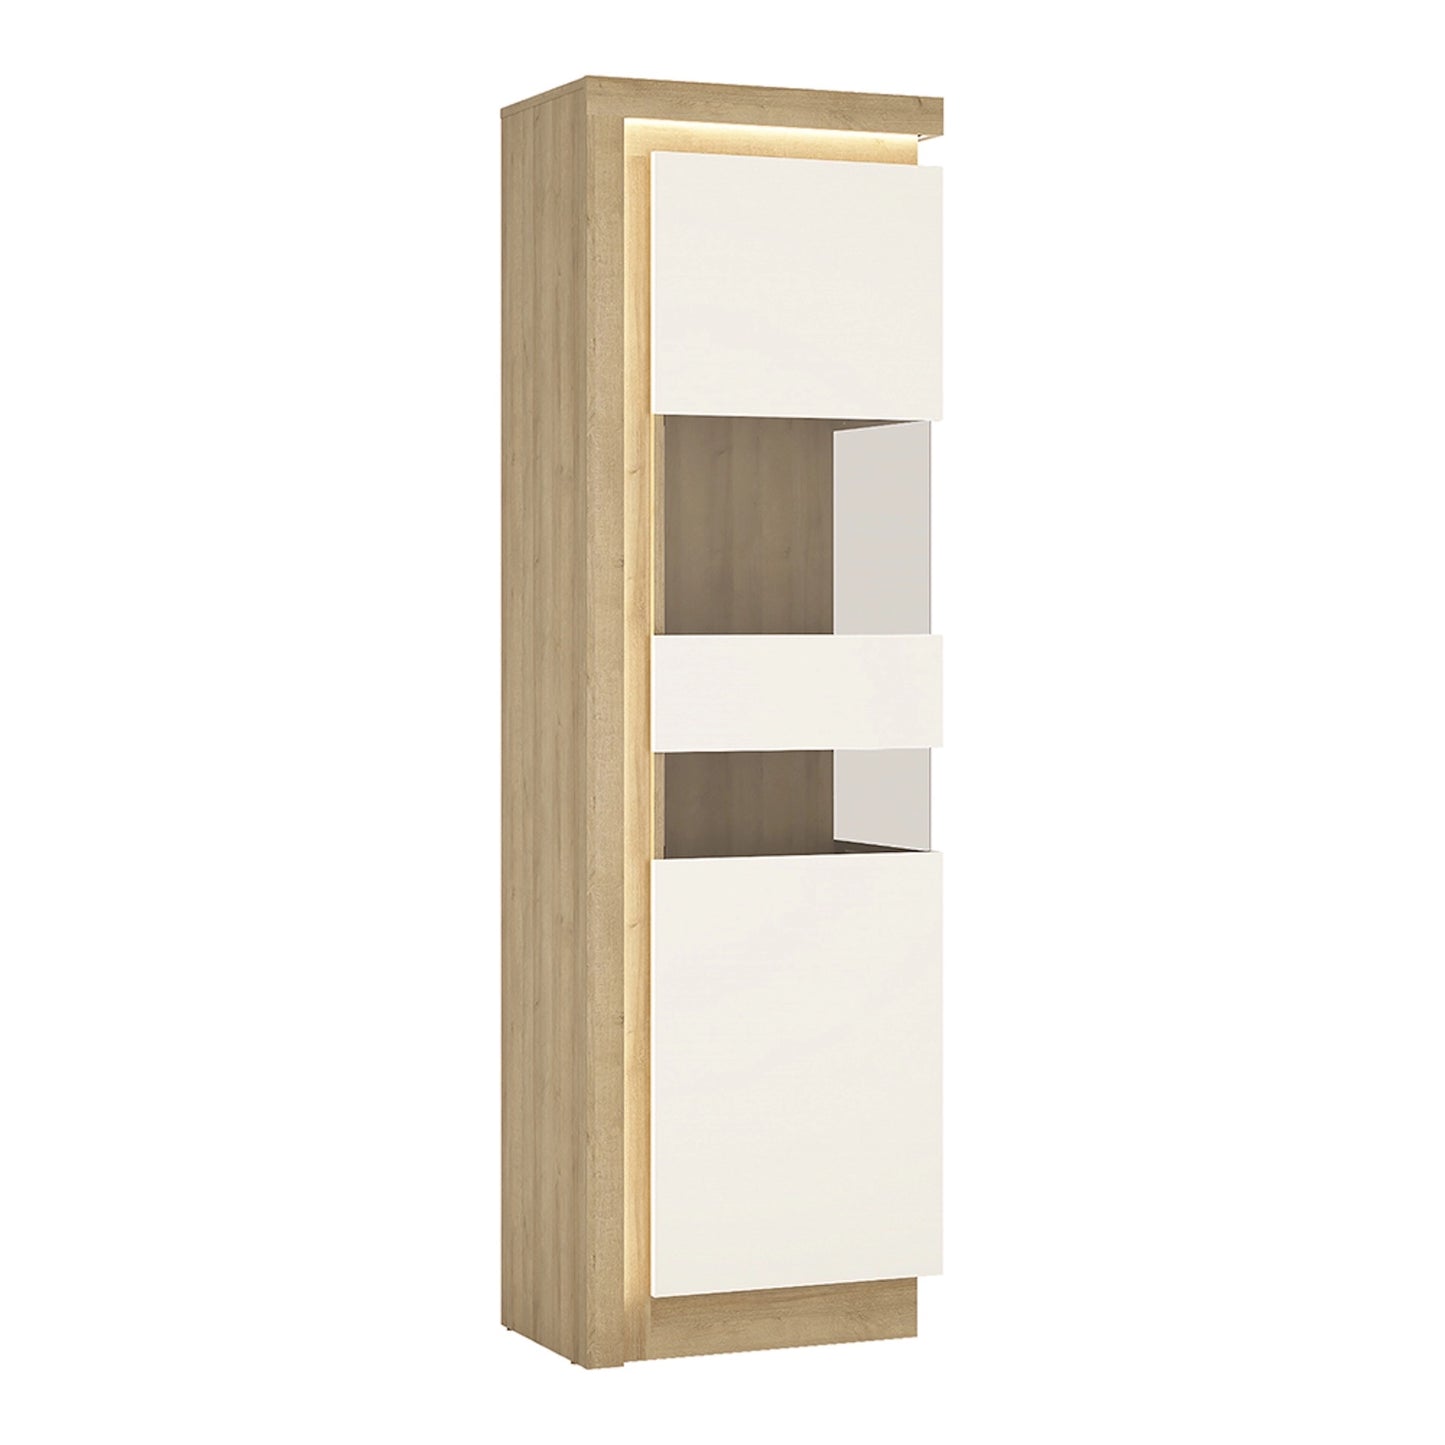 Furniture To Go Lyon Tall Narrow Display Cabinet (RHD) in Riviera Oak/White High Gloss